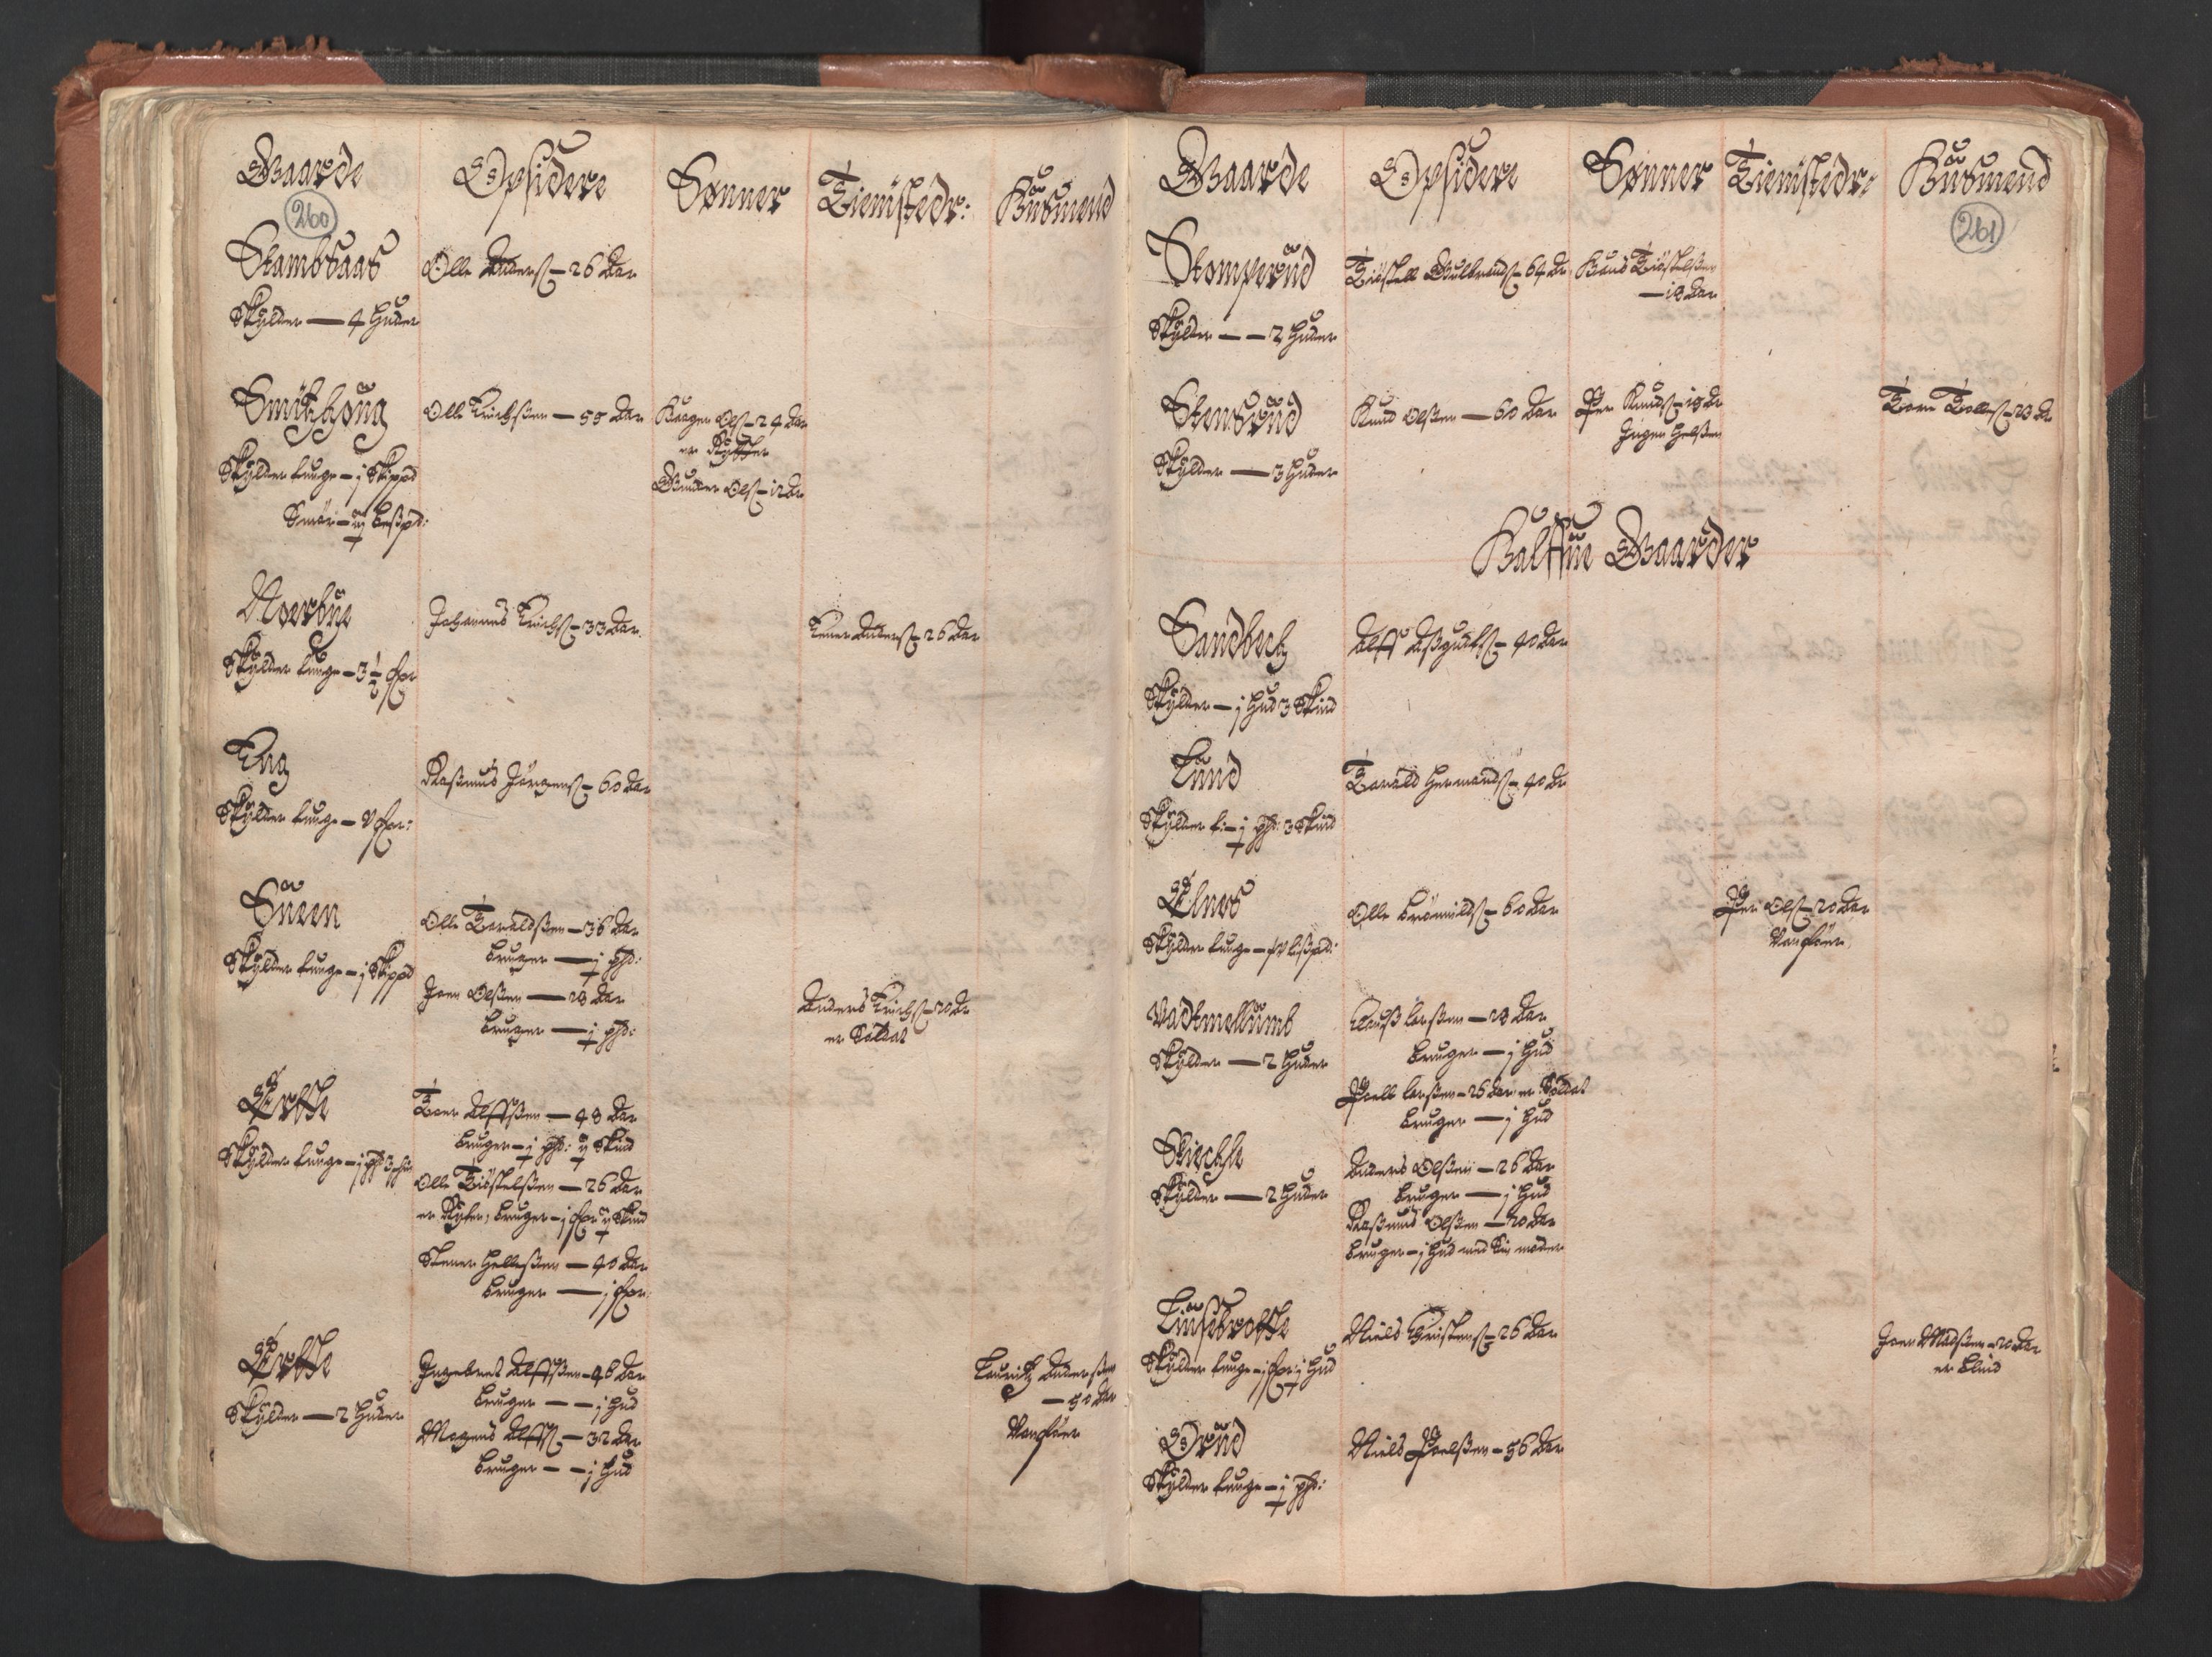 RA, Fogdenes og sorenskrivernes manntall 1664-1666, nr. 1: Fogderier (len og skipreider) i nåværende Østfold fylke, 1664, s. 260-261